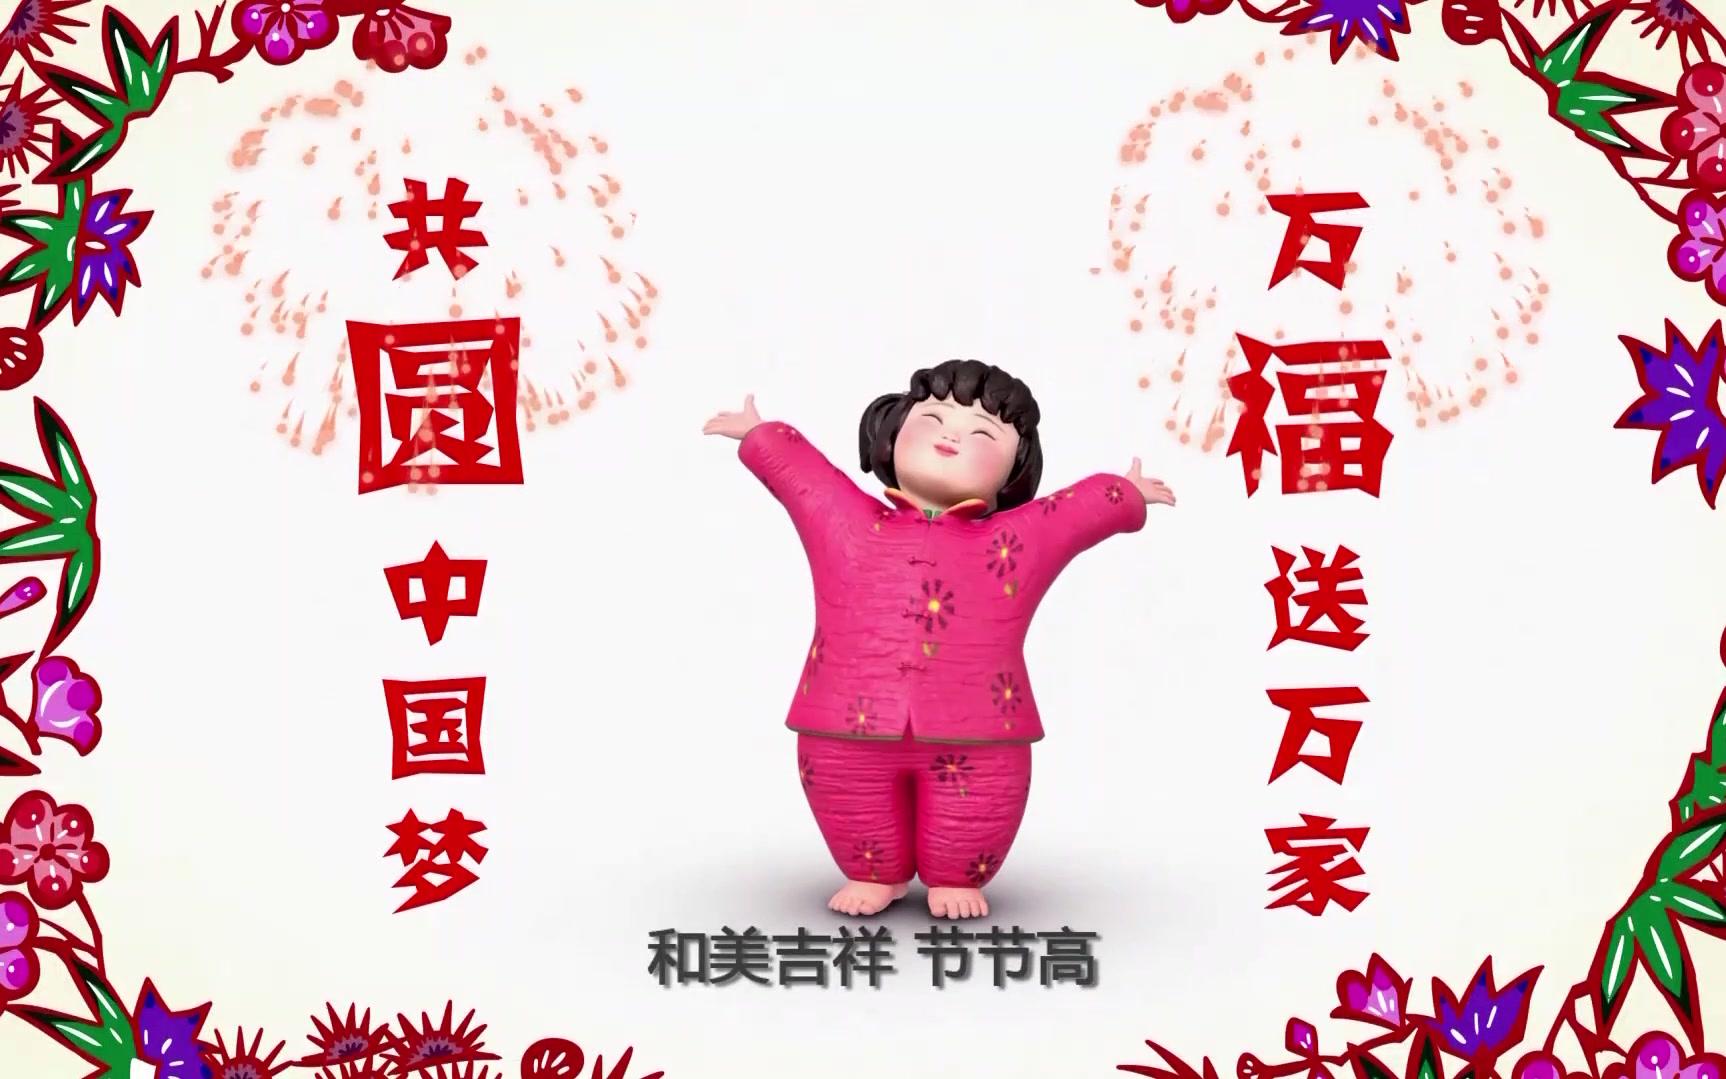 yy青橙-梦娃公益广告合集-社会主义核心价值观-2018公益广告-超清_哔哩哔哩 (゜-゜)つロ 干杯~-bilibili